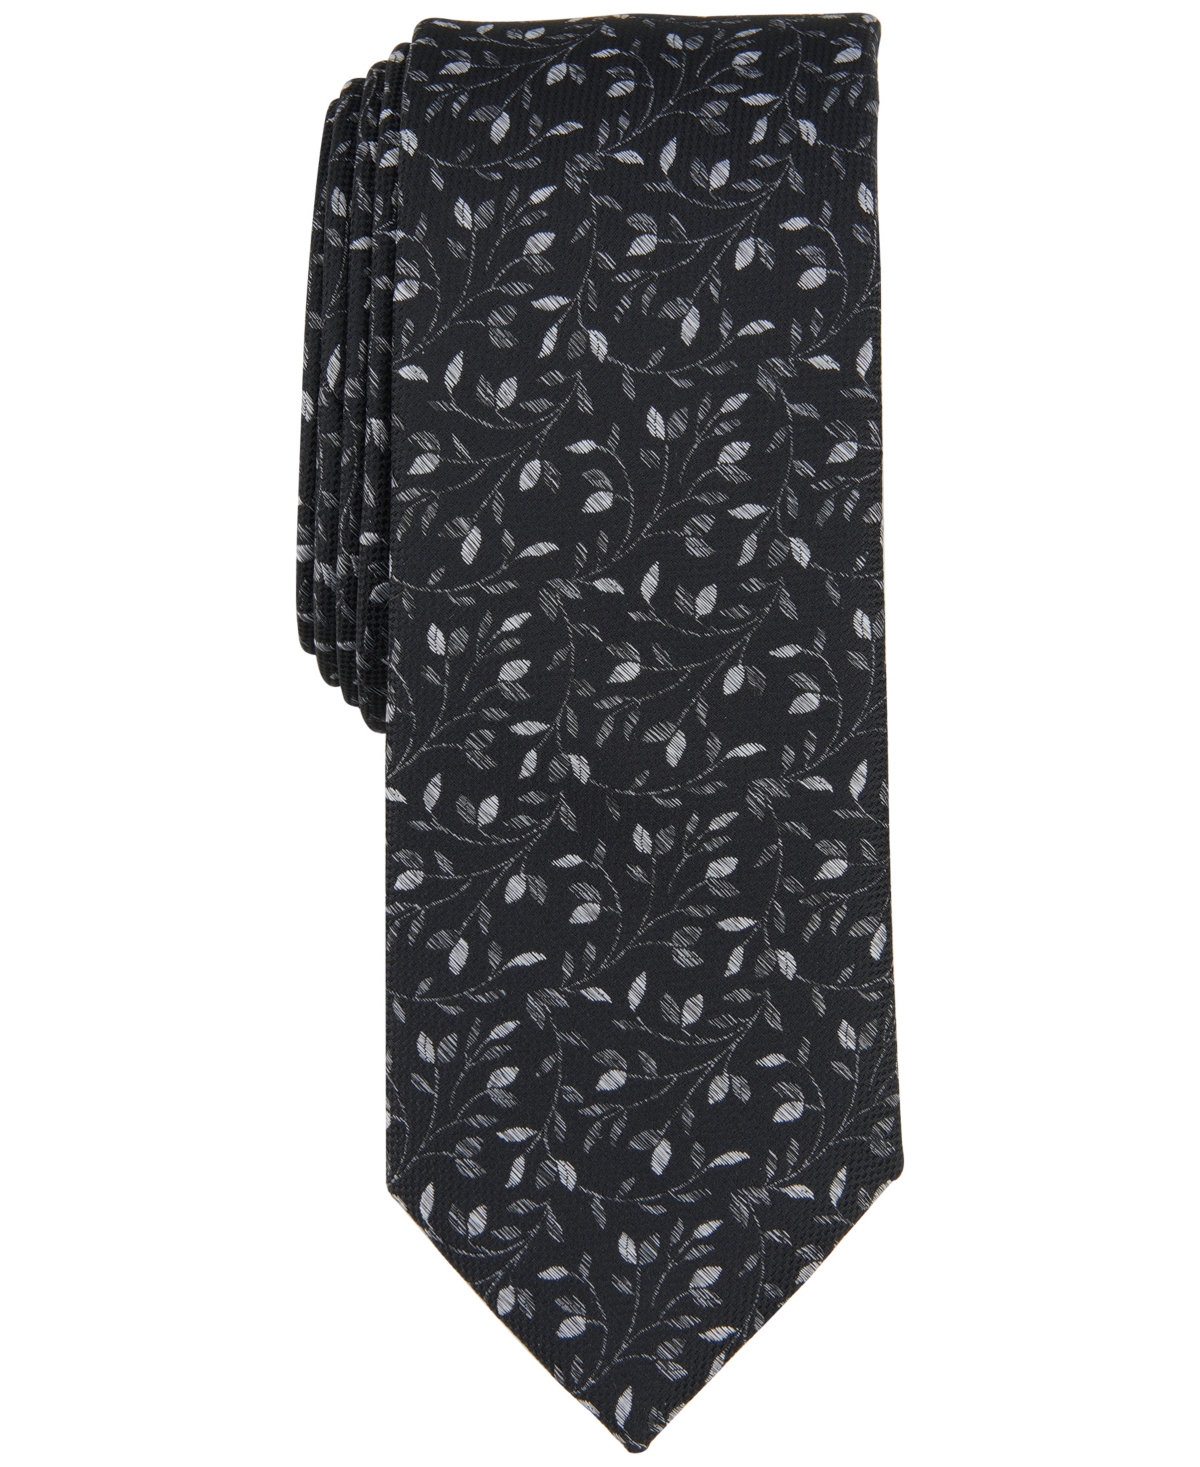 Men's Powell Vine Tie, Created for Macy's - Navy